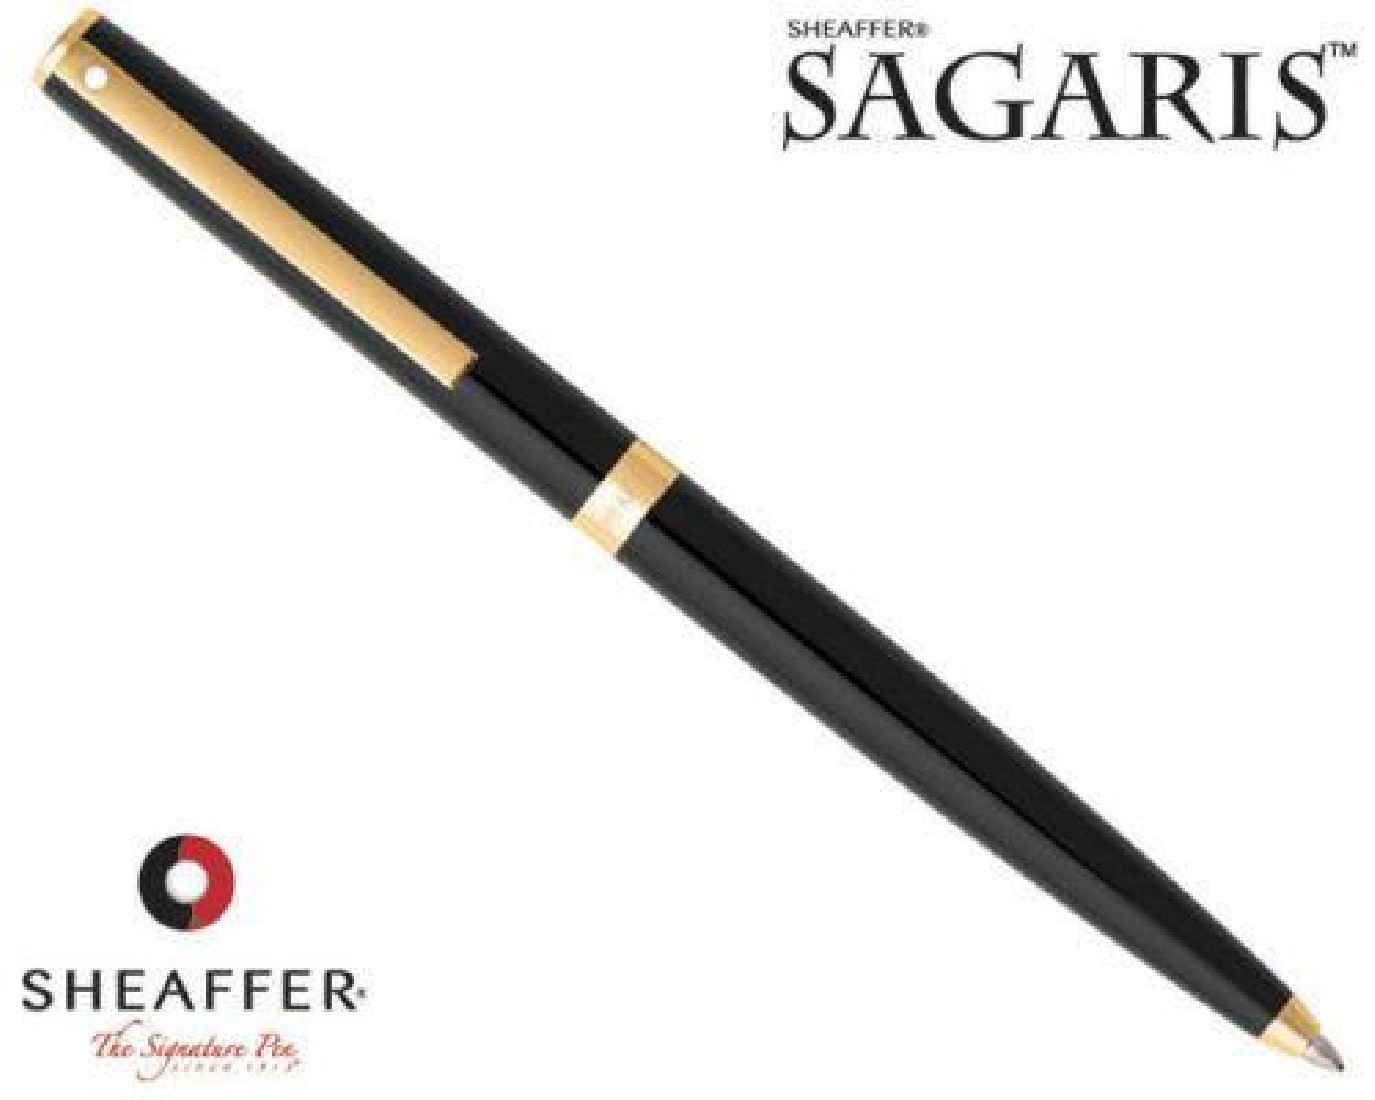 Gloss Black Sheaffer Sagaris Rollerball Pen New In Box SH-9471-1 